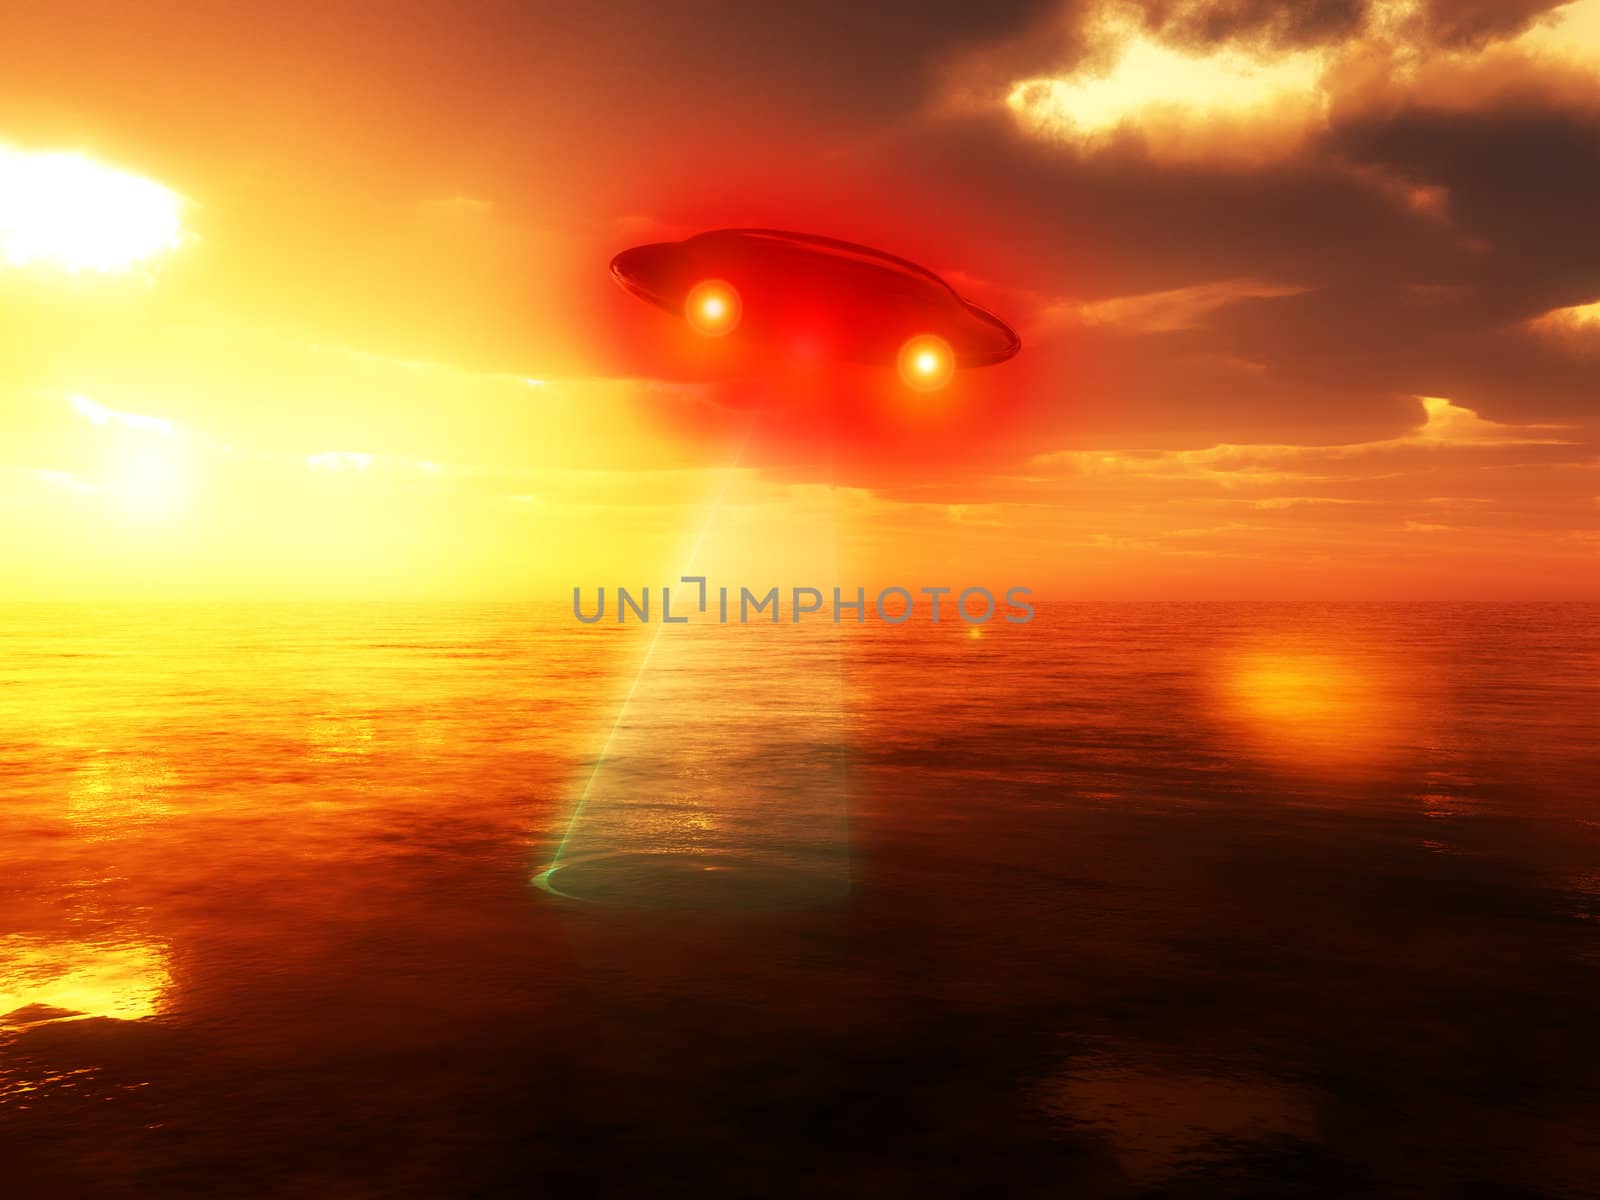 UFO Over Water by harveysart